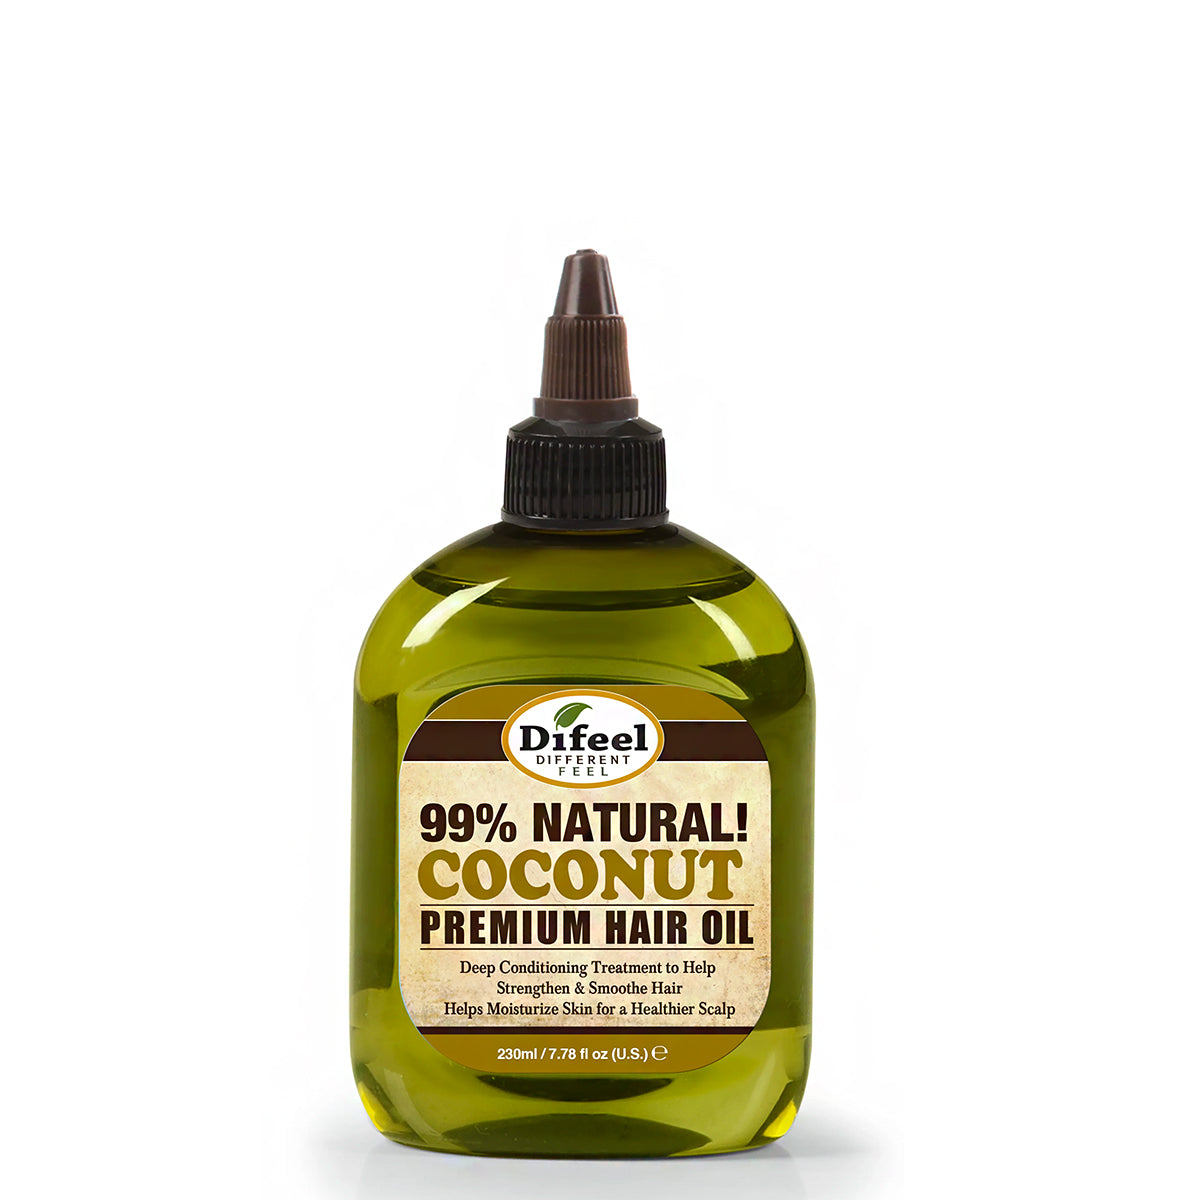 Difeel 99% Natural Coconut Premium Hair Oil 7.78oz